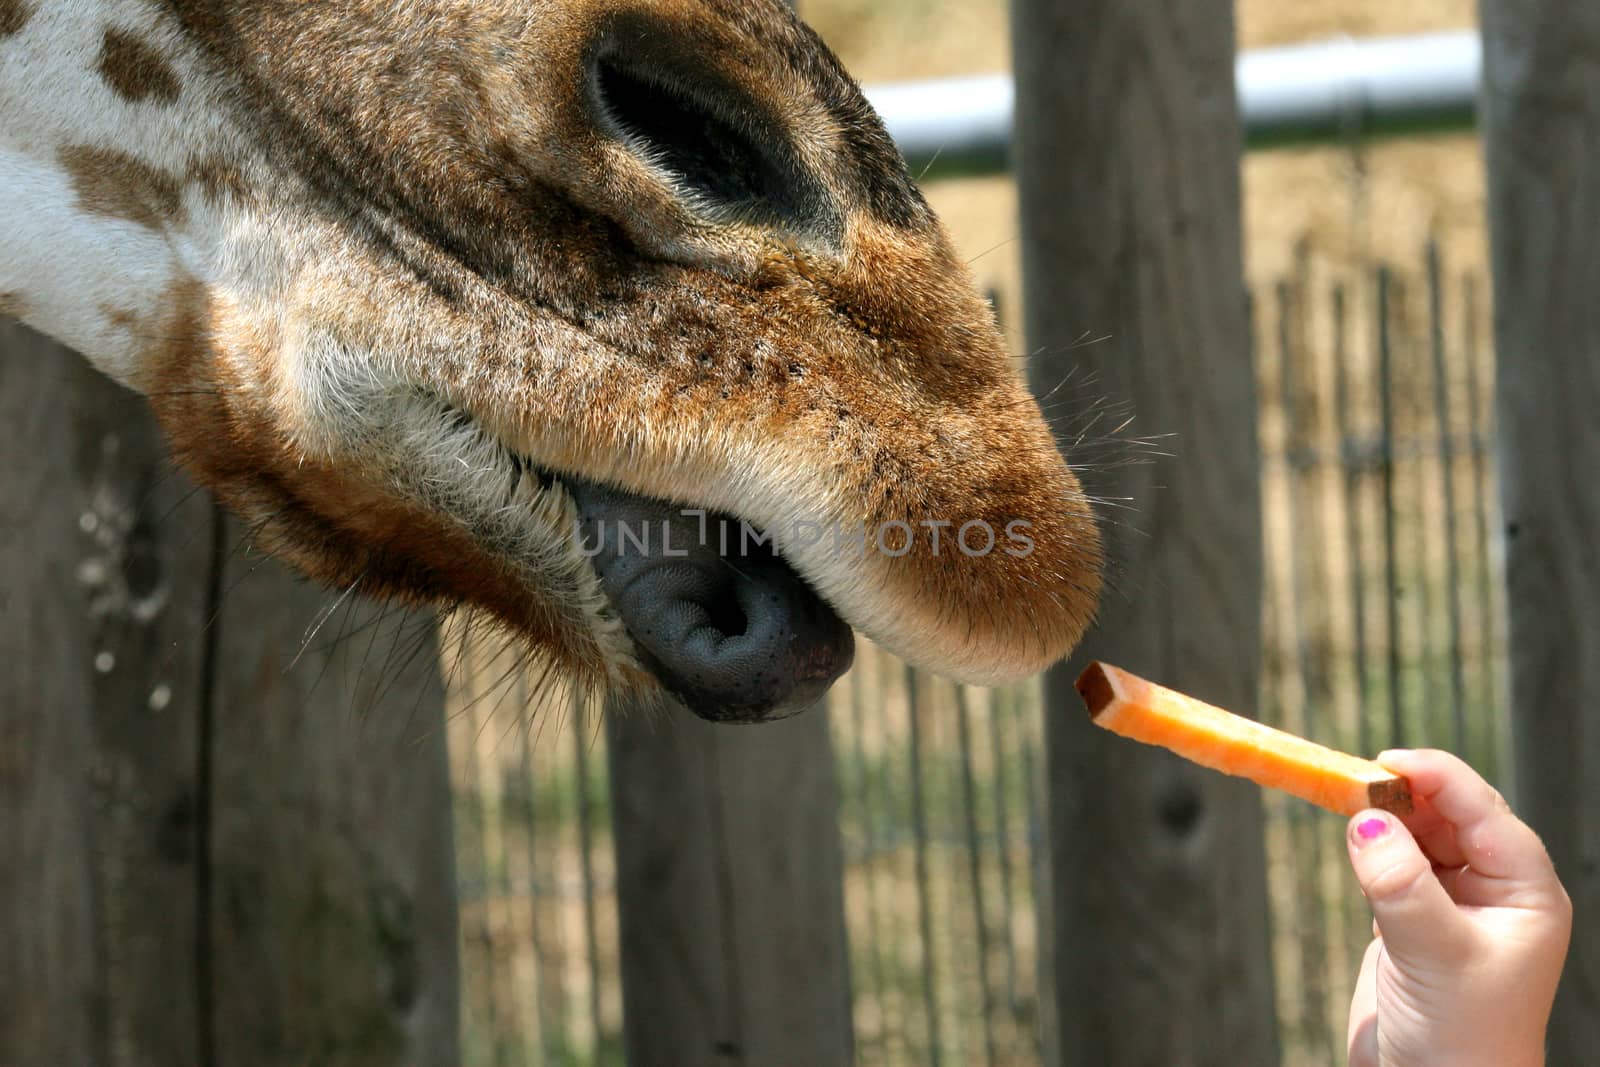 Tongue of giraffe by Carratera